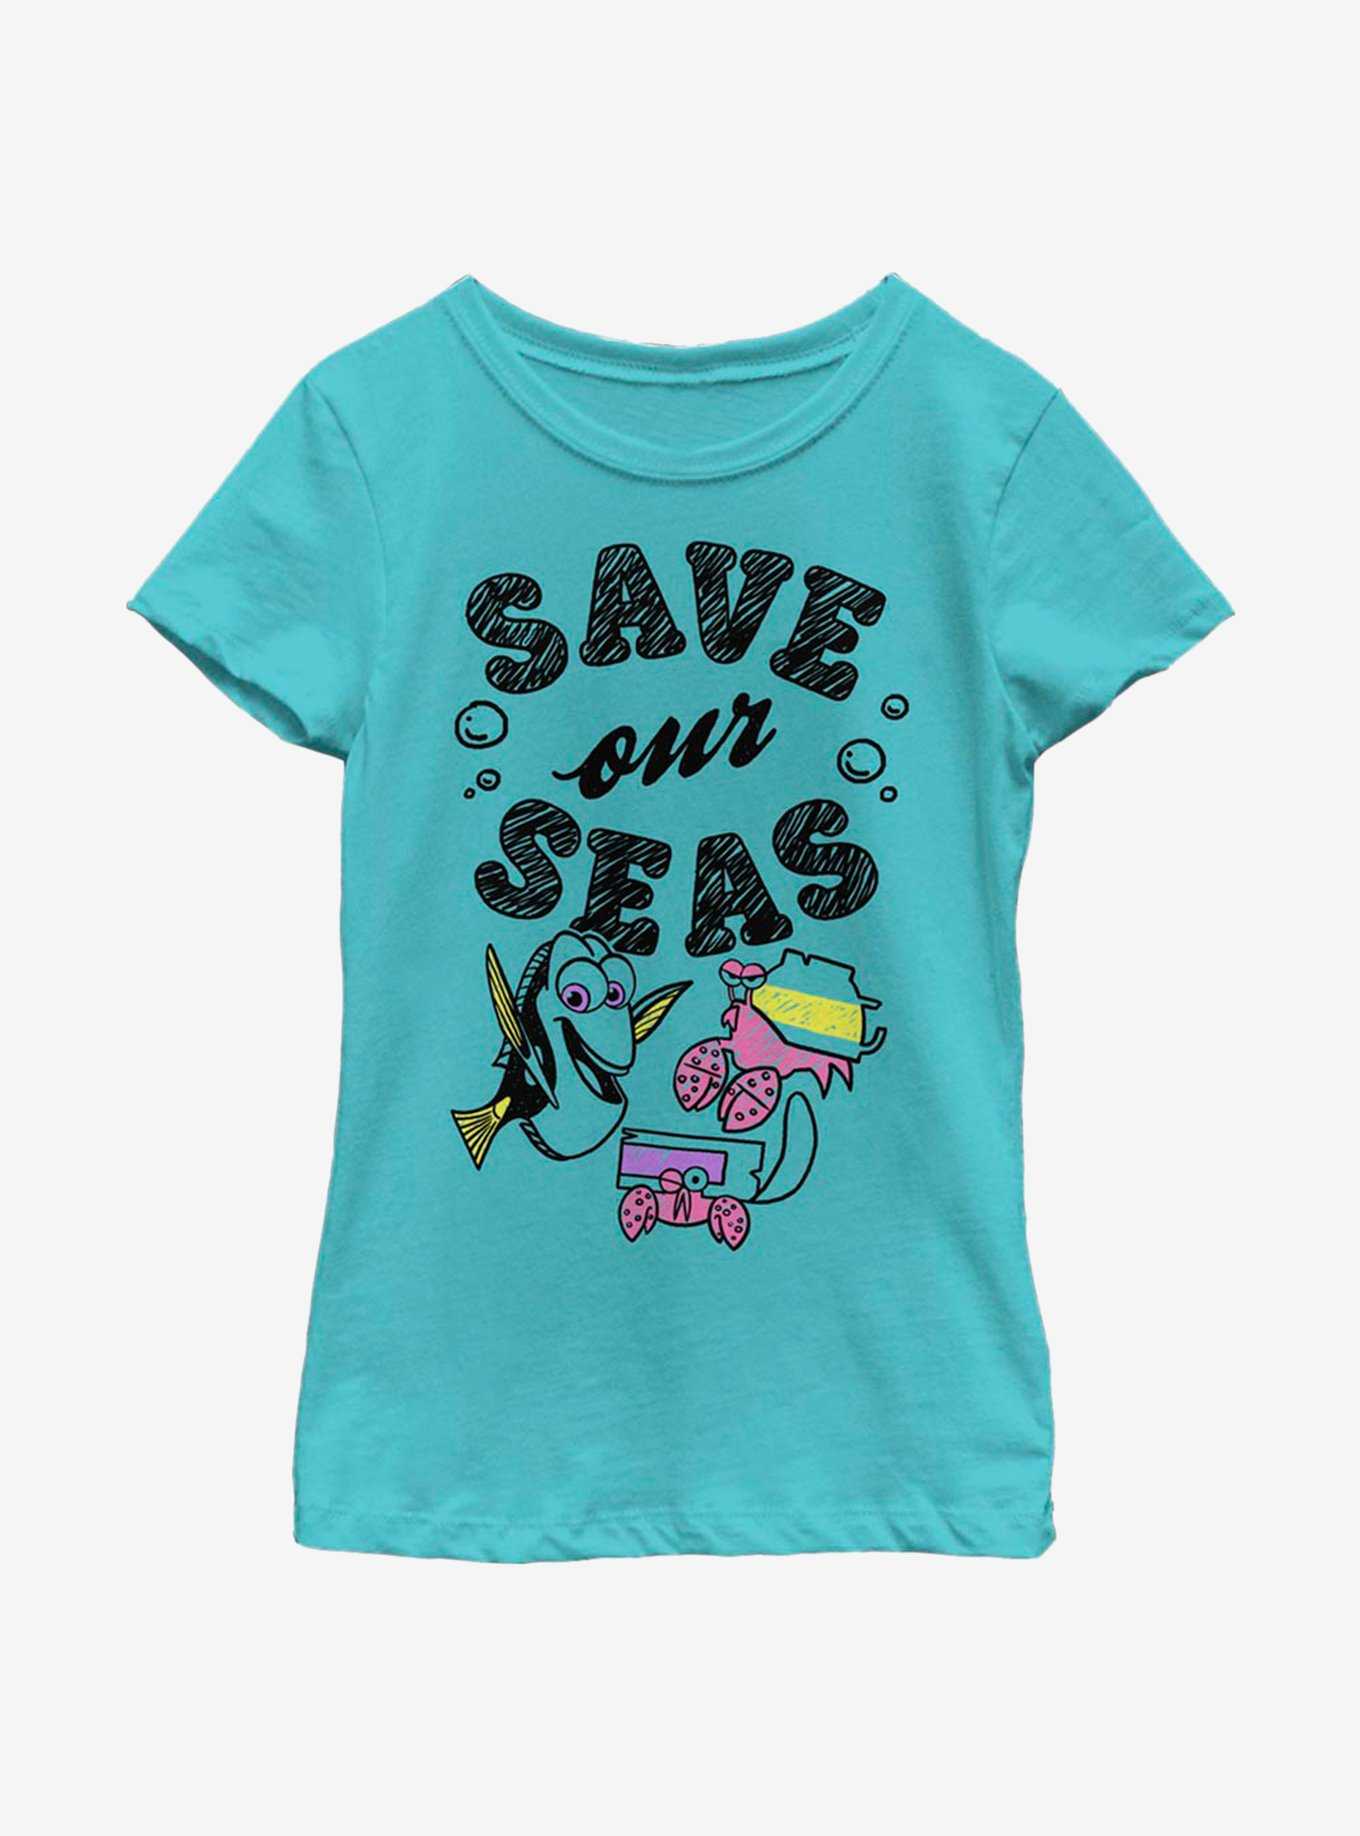 Disney Pixar Finding Nemo Eco Dory Youth Girls T-Shirt, , hi-res